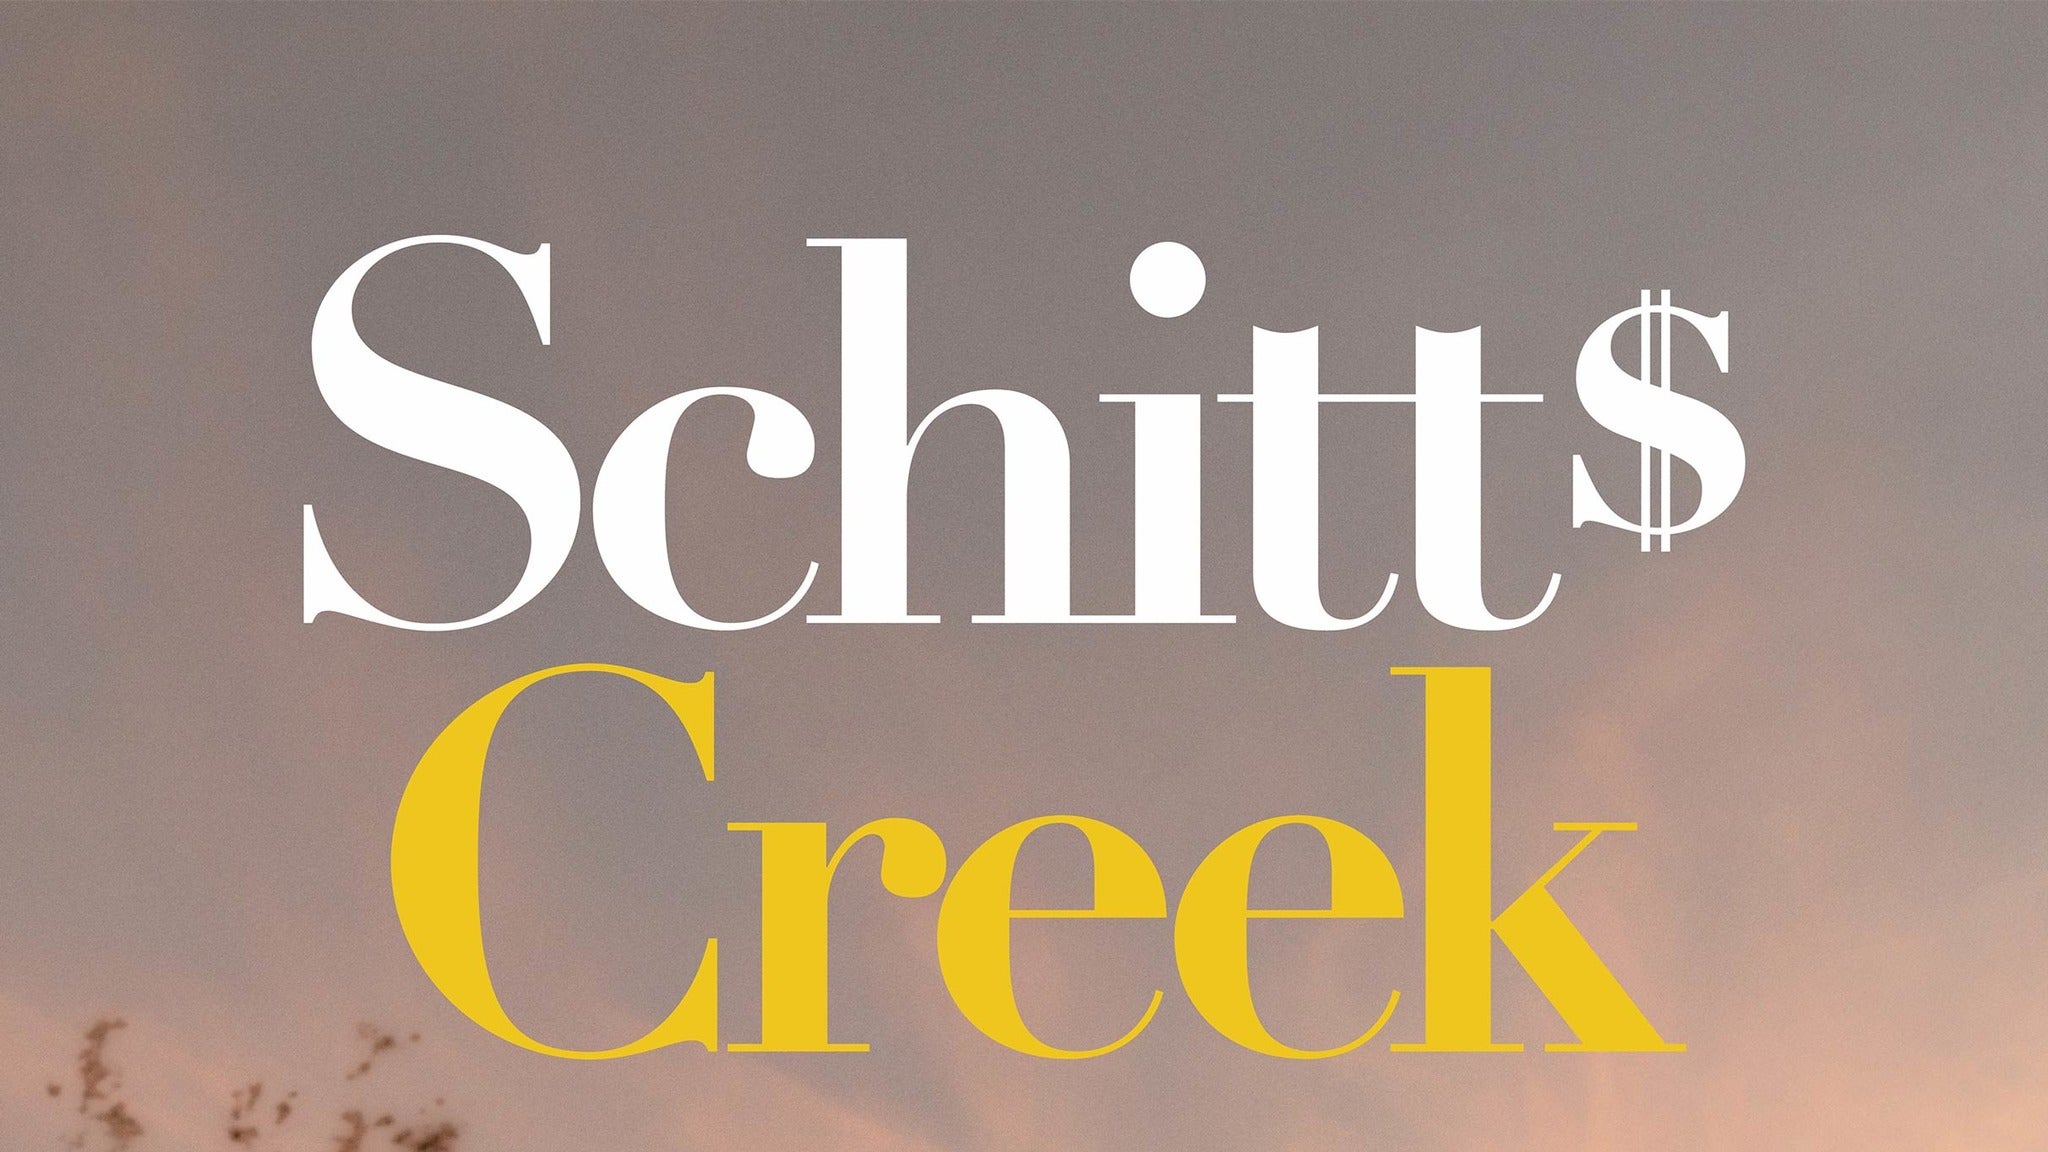 Schitt's Creek: The Farewell Tour in National Harbor  promo photo for Live Nation presale offer code